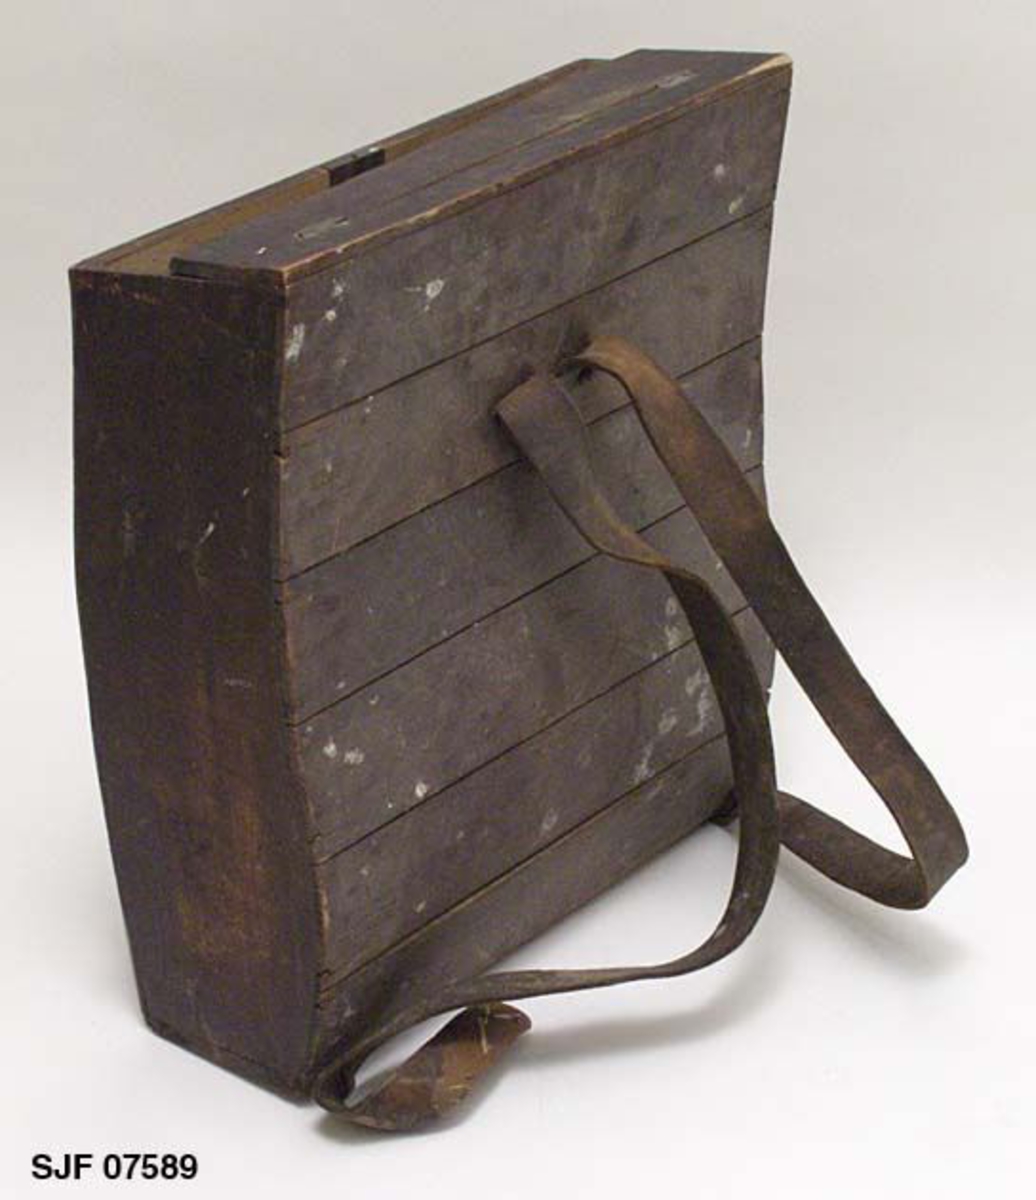 Form: Kasse med buet rygg og front
Bærekonten har et defekt lokk som var låsbart den tid den var i orden. 